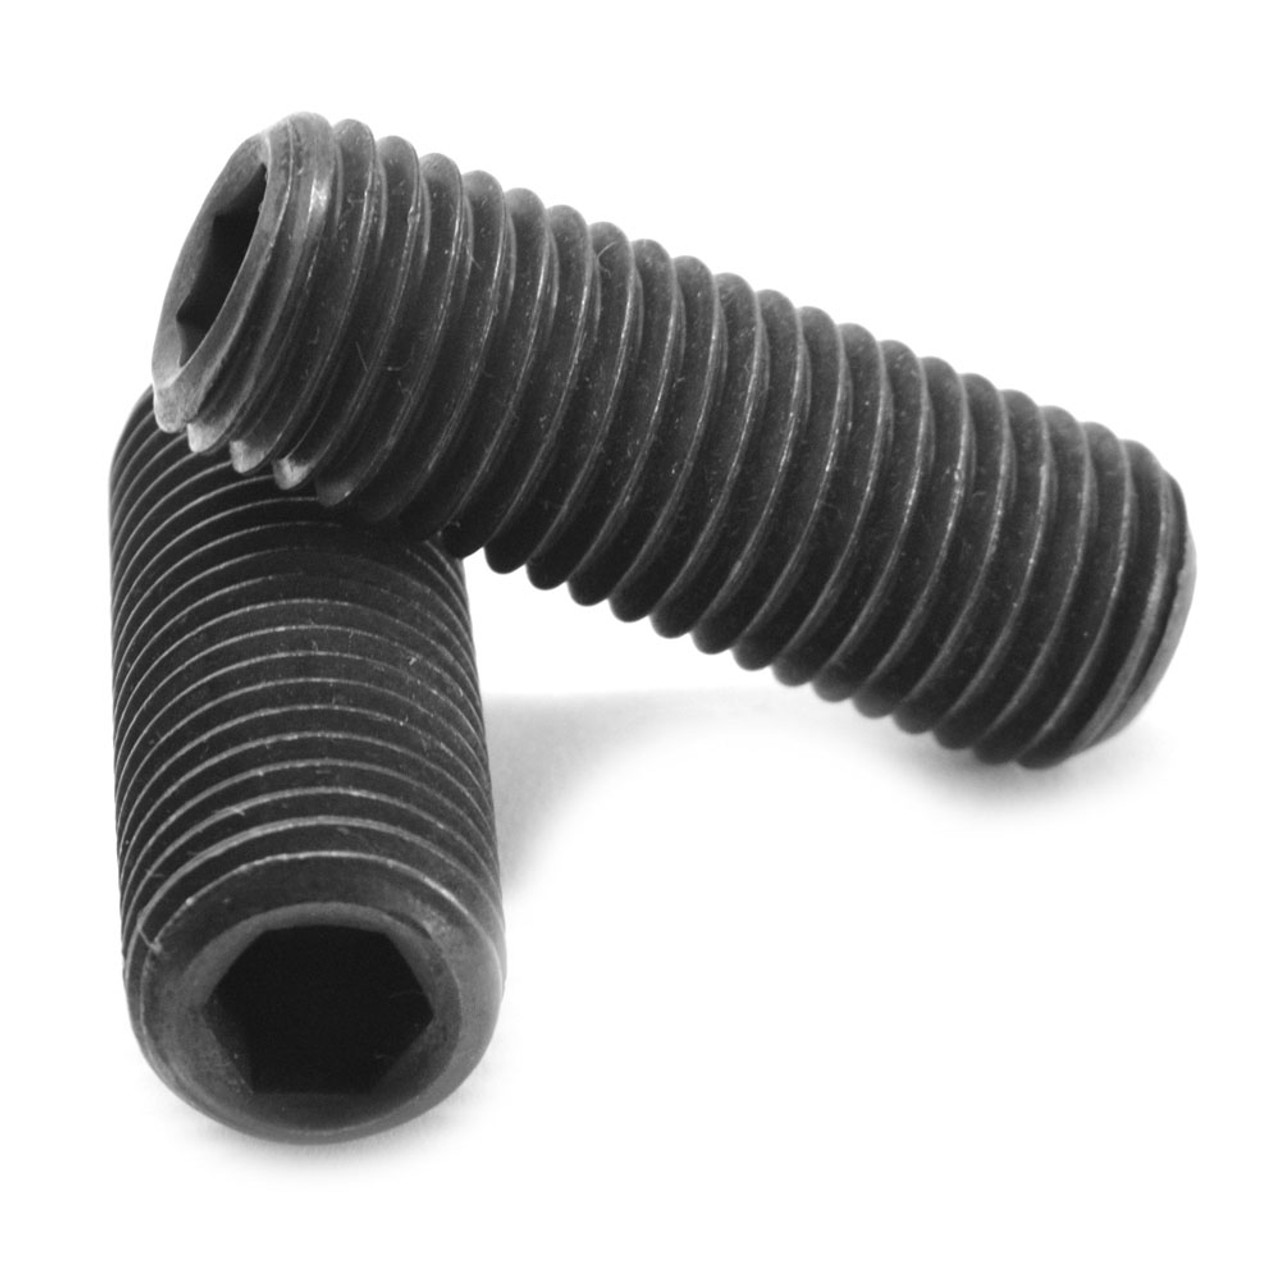 M8 x 1.25 x 8 MM Coarse Thread ISO 4029 / DIN 916 Class 45H Socket Set Screw Cup Point Alloy Steel Black Oxide